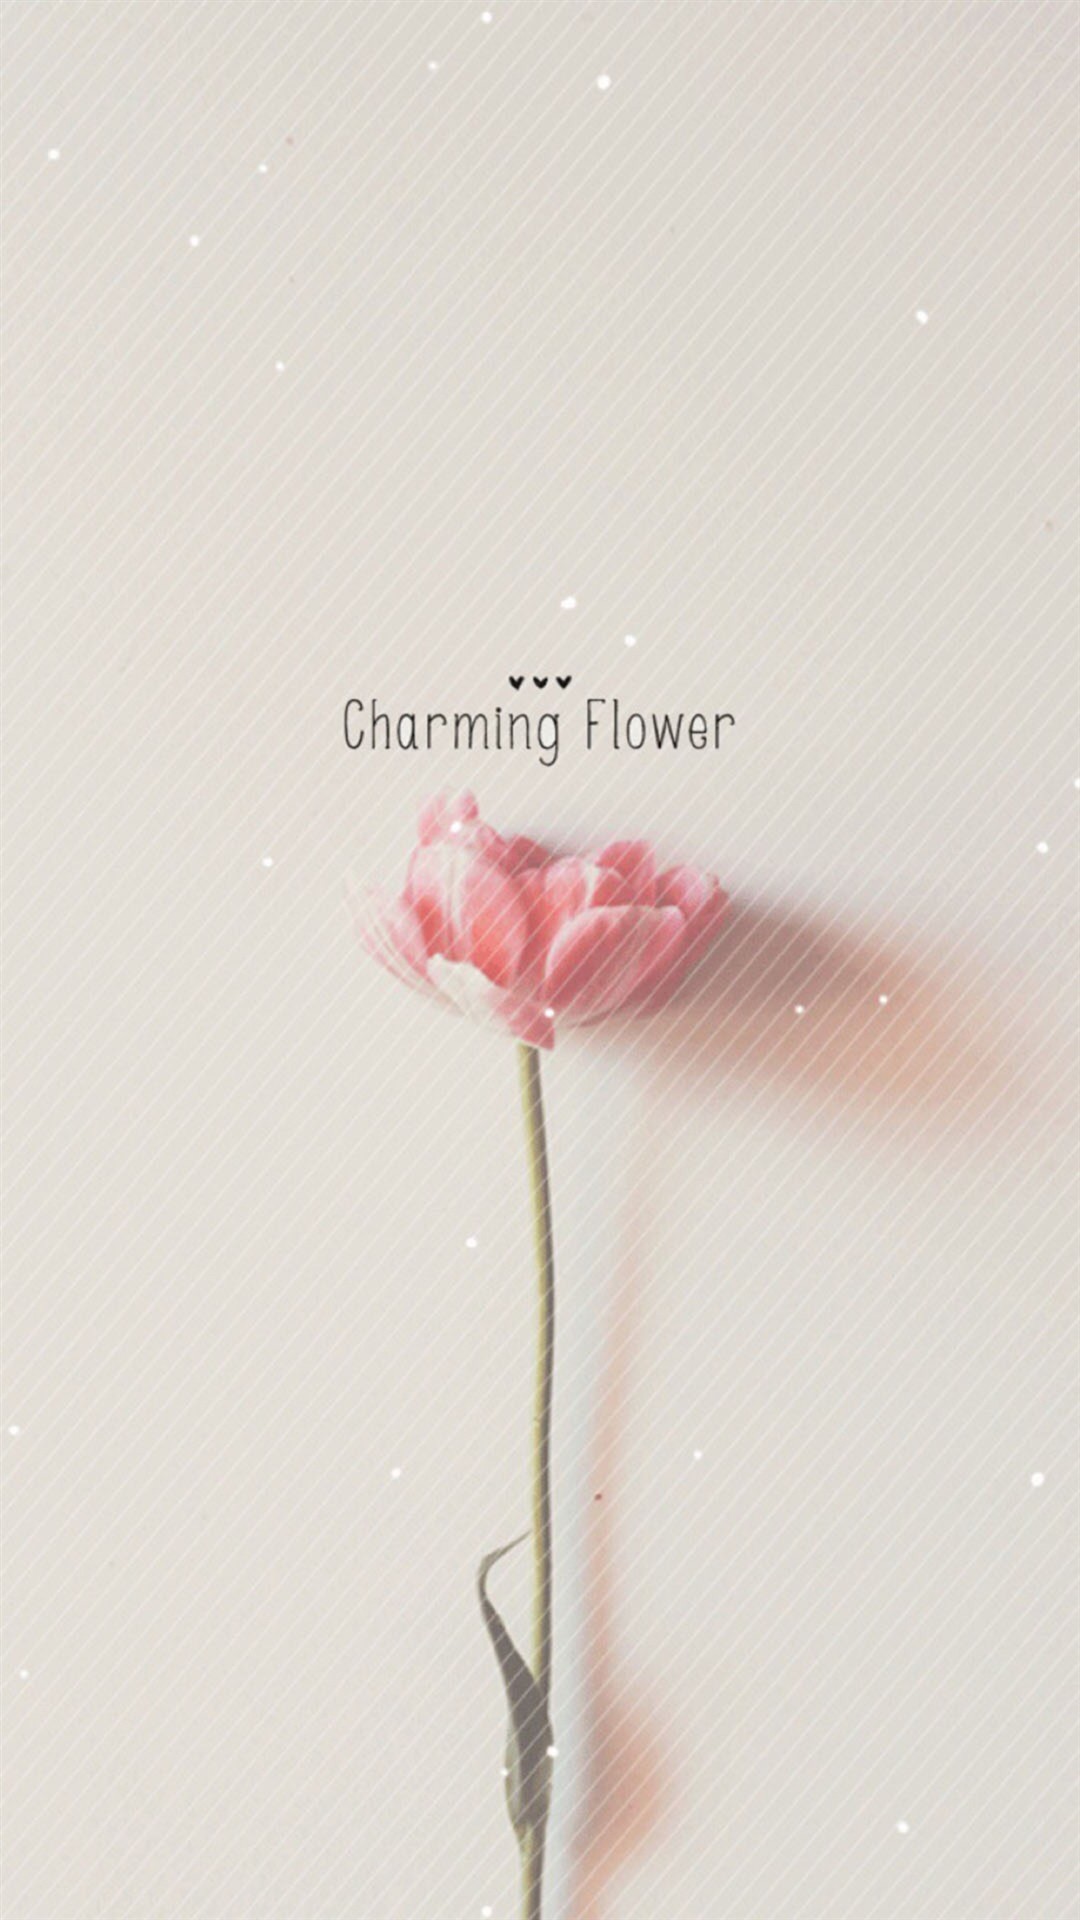 1080x1920 Iphone 6 Plus Flower Background Flowers Healthy. Flower Wallpaper For Iphone  6s Plus Flowers Healthy